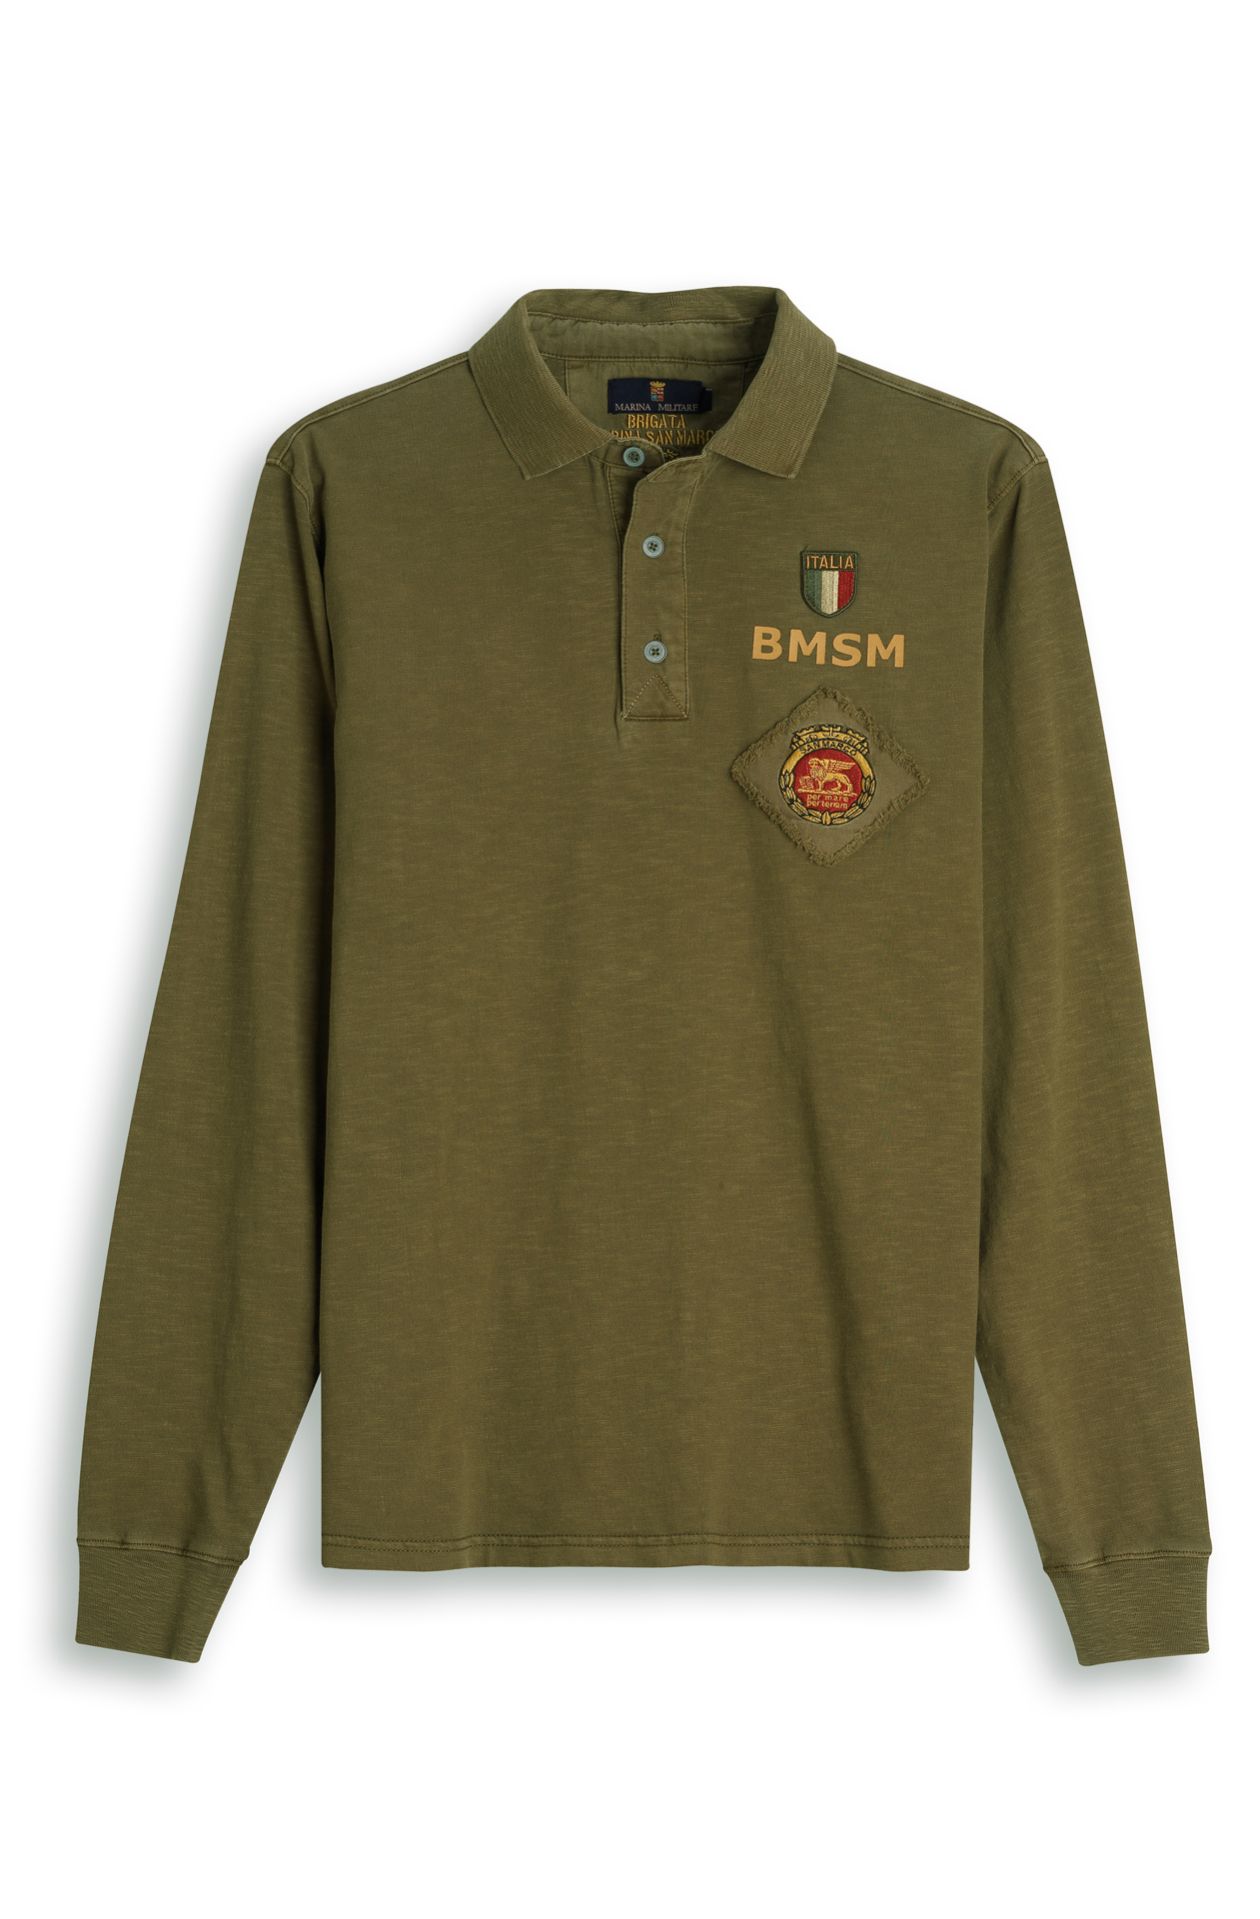 BMSM pure slub Sportswear Militare polo cotton Marina shirt